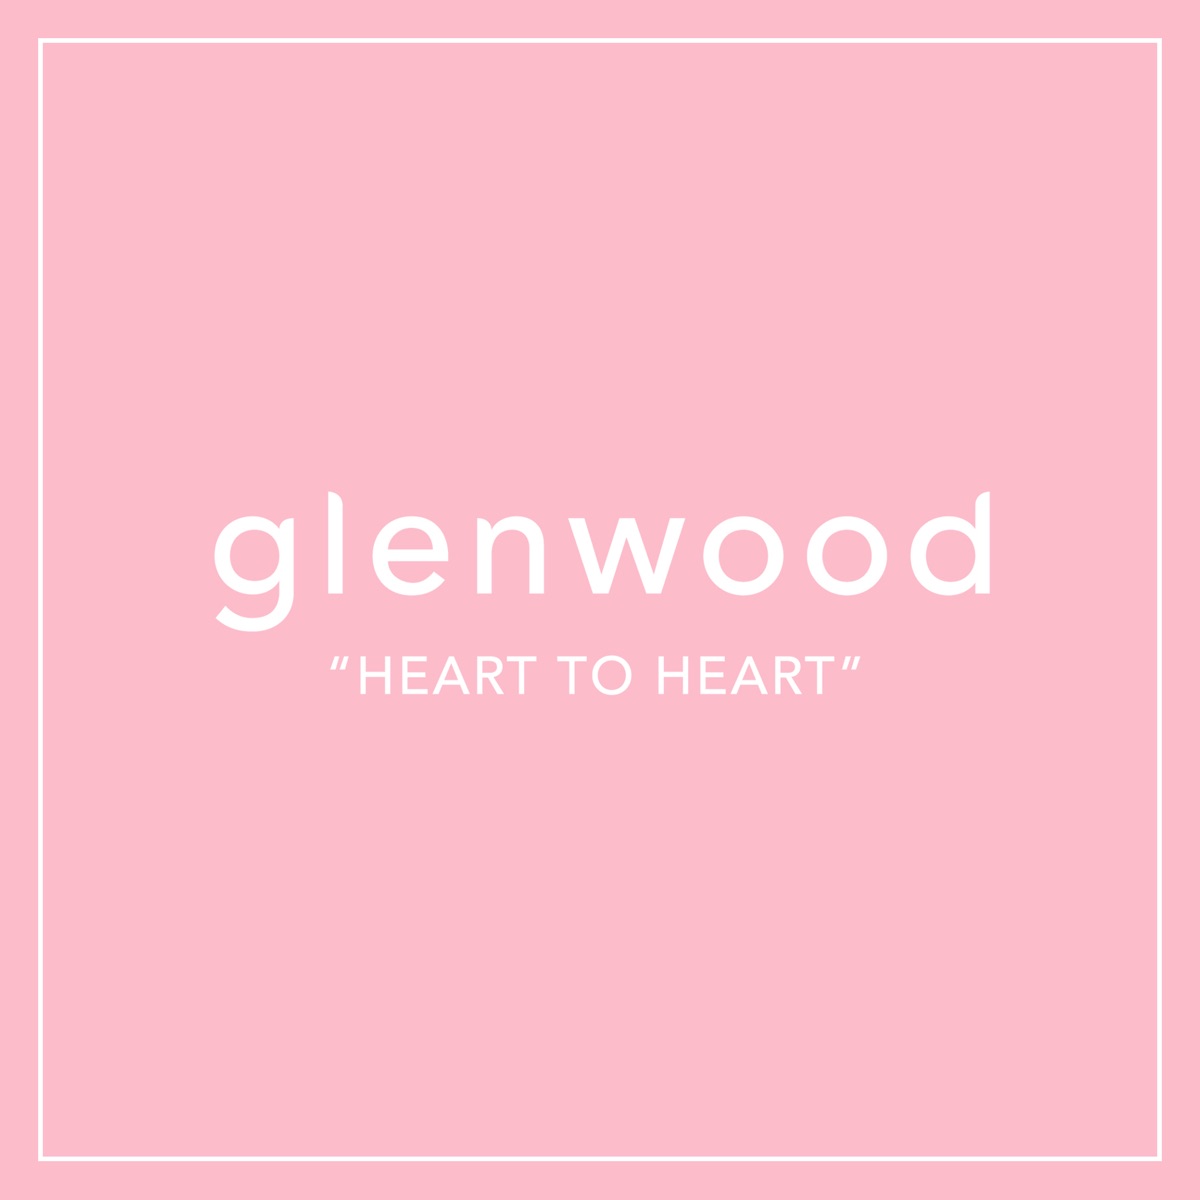 glenwood "HEART TO HEART"